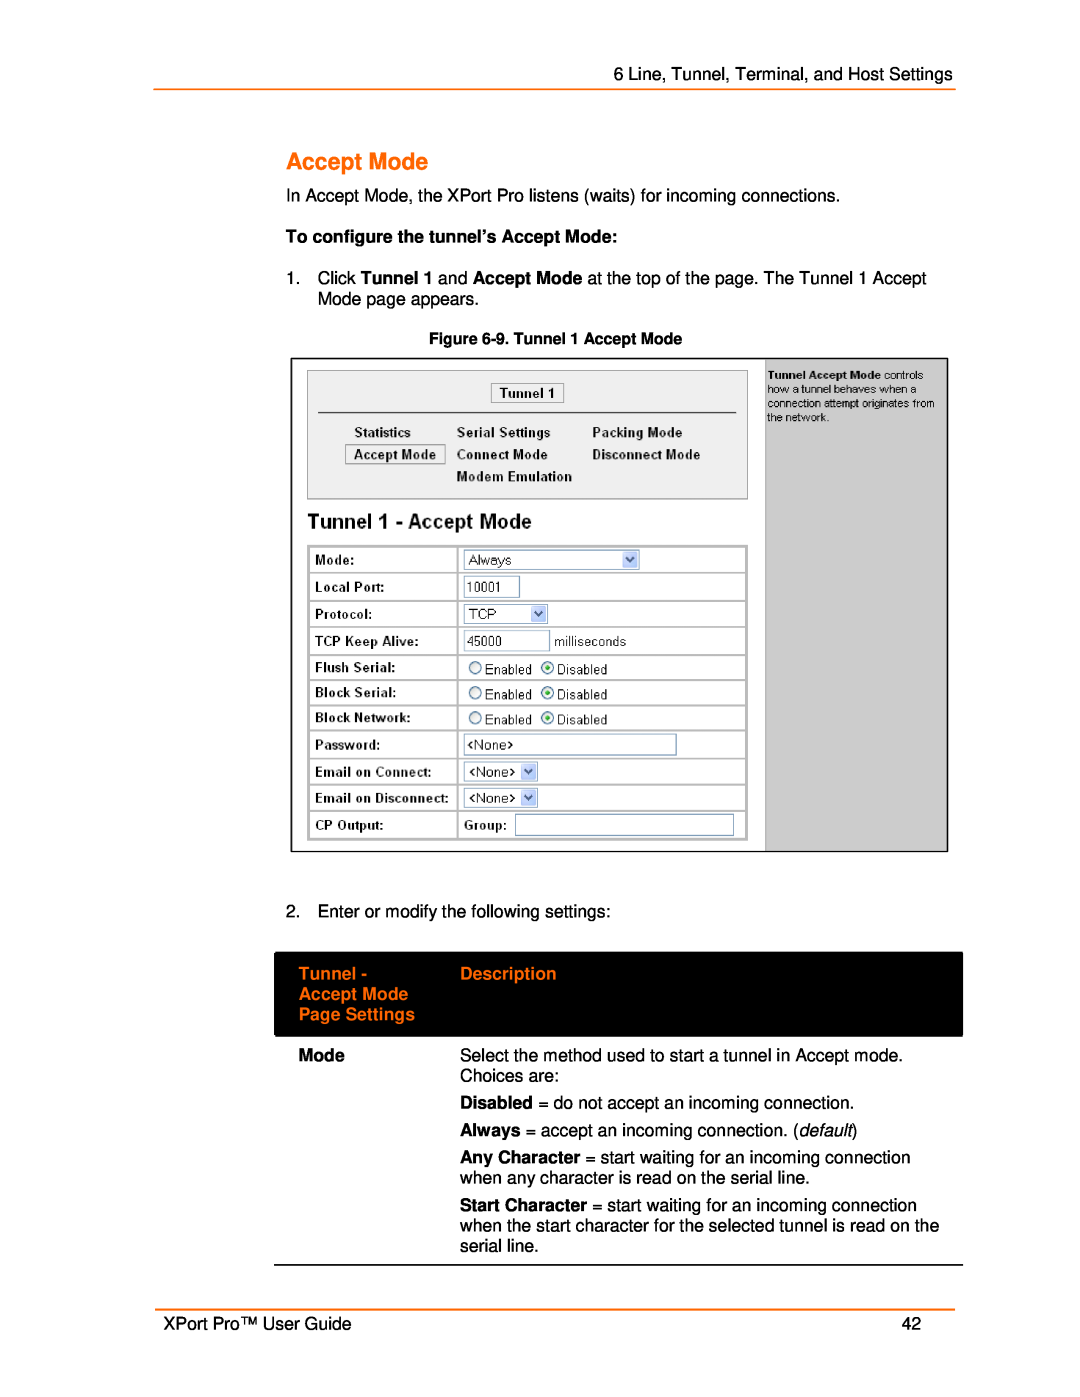 Lantronix 900-560 manual Accept Mode, Tunnel, Description, Page Settings 